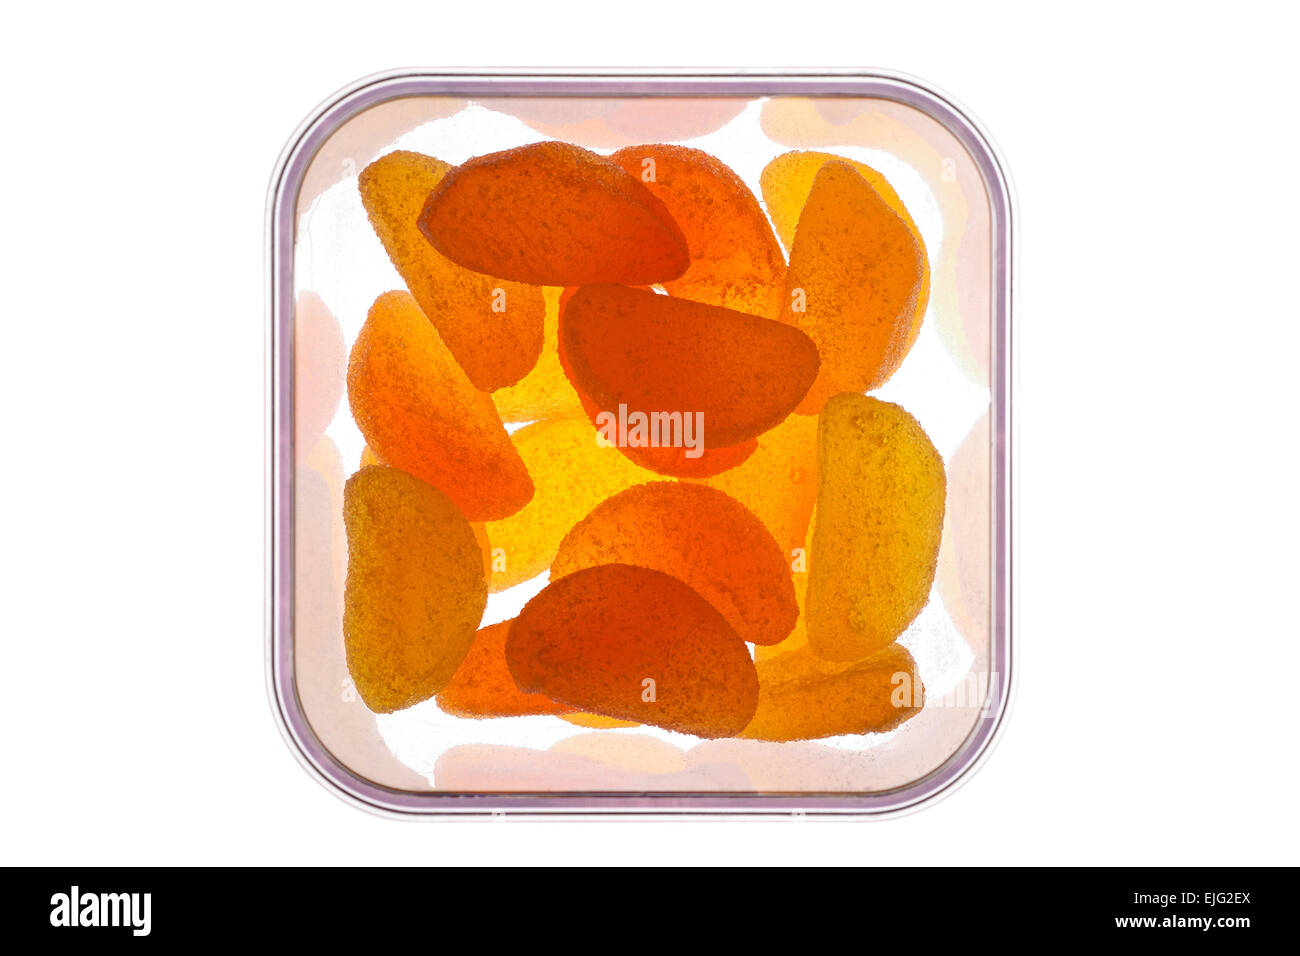 Orange and lemon jellies in glass jar backlit  close-up Stock Photo